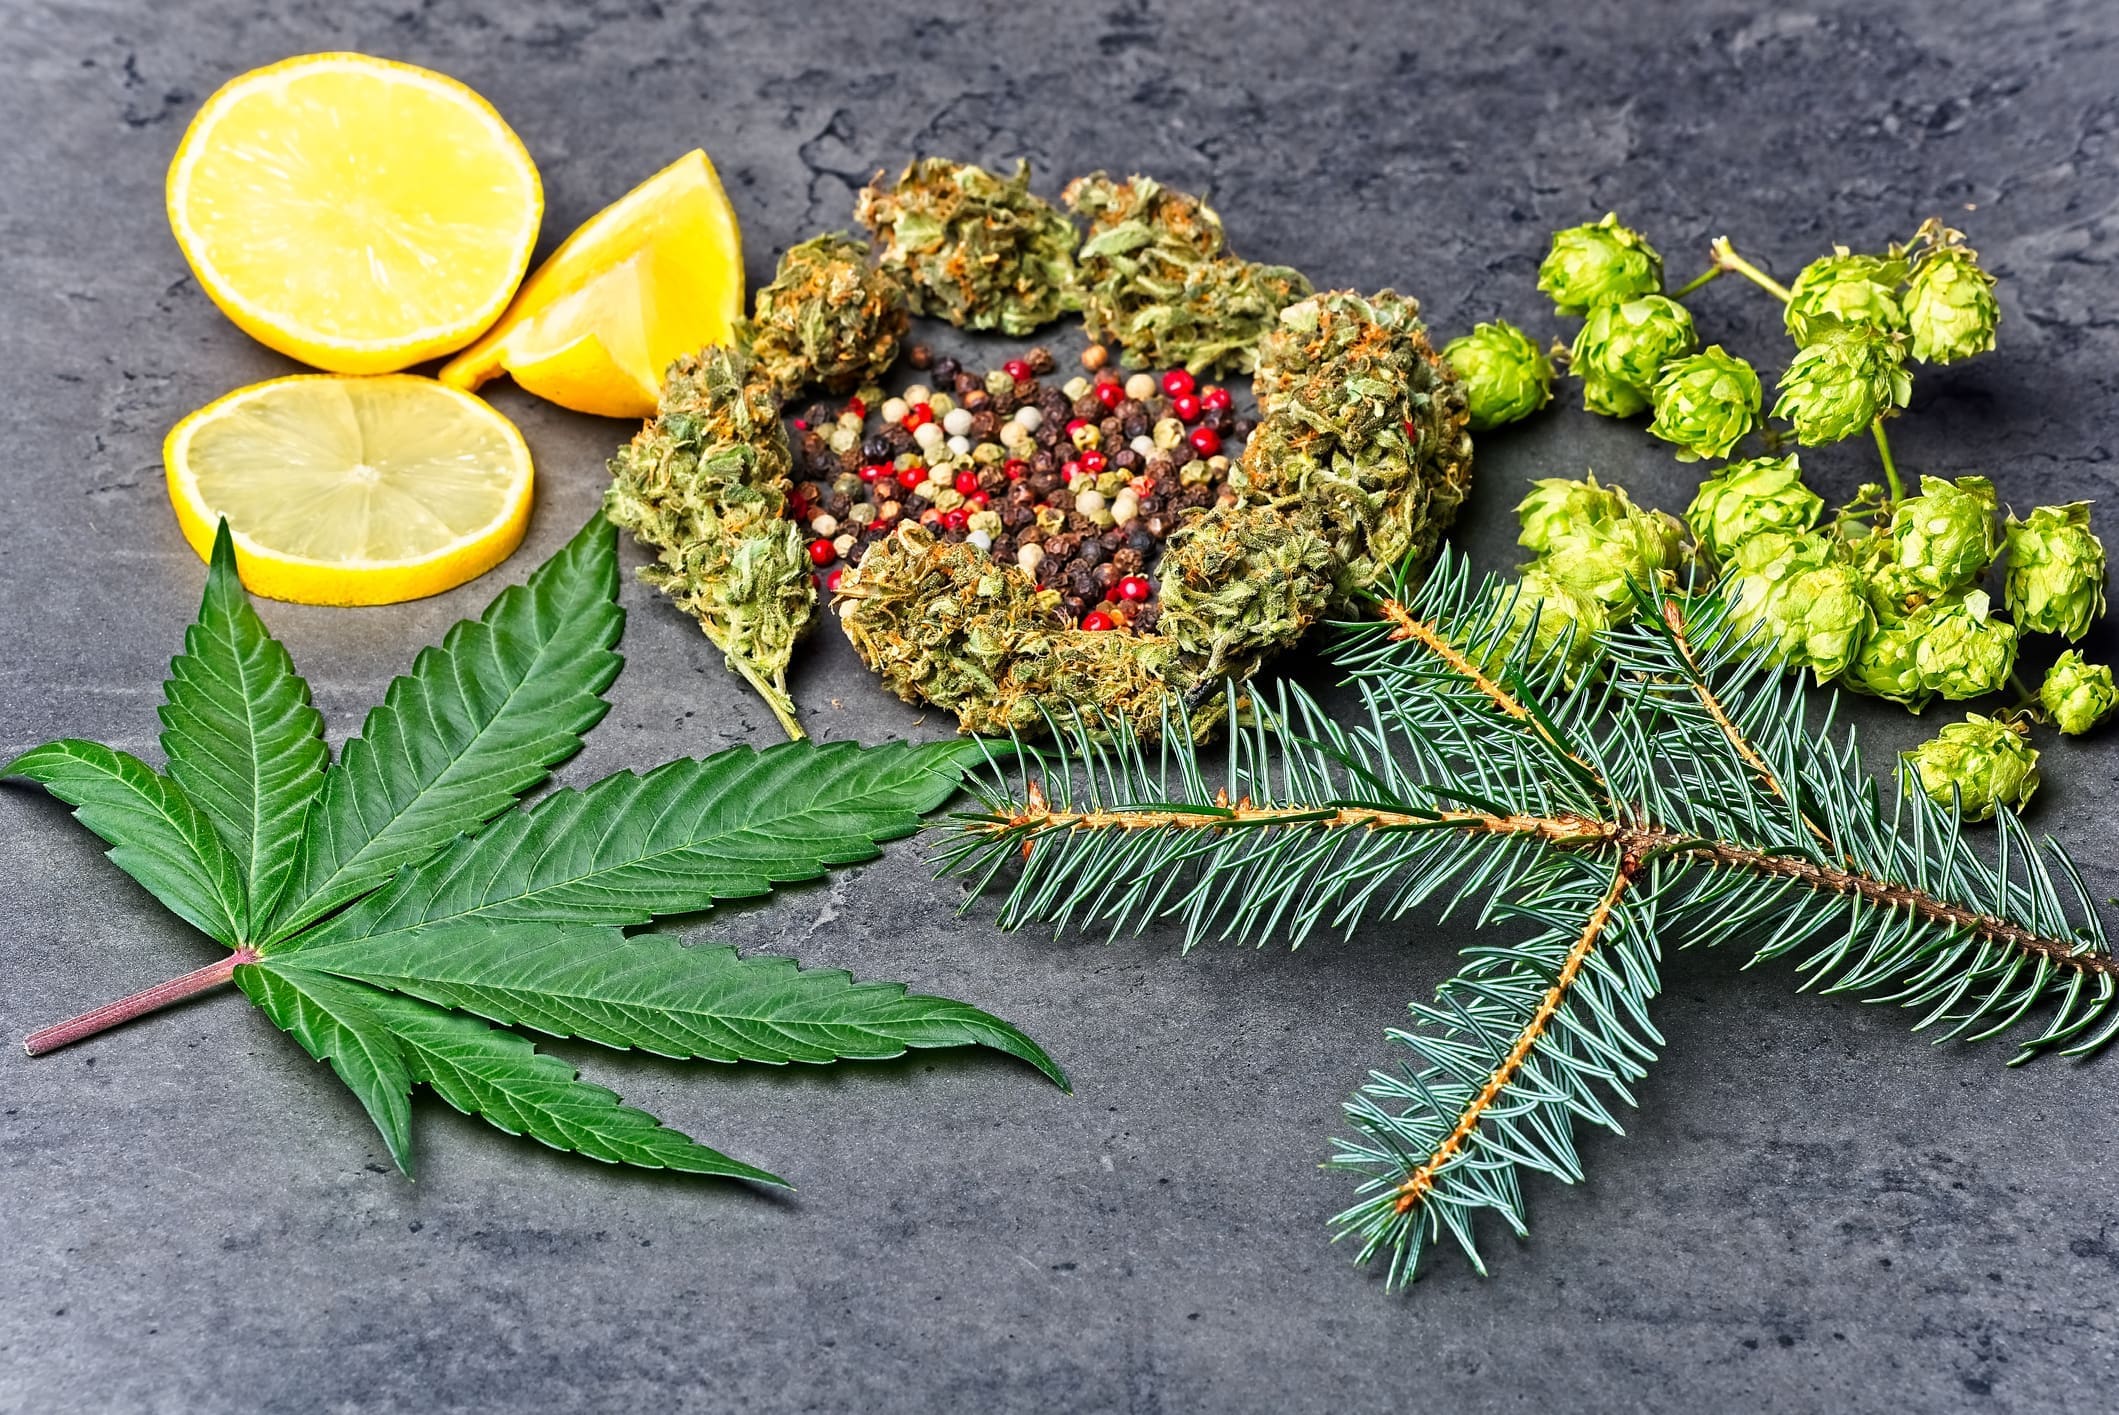 Cannabis Bud And Leaf With Hoppy Pepper Lemon And Fir Needles